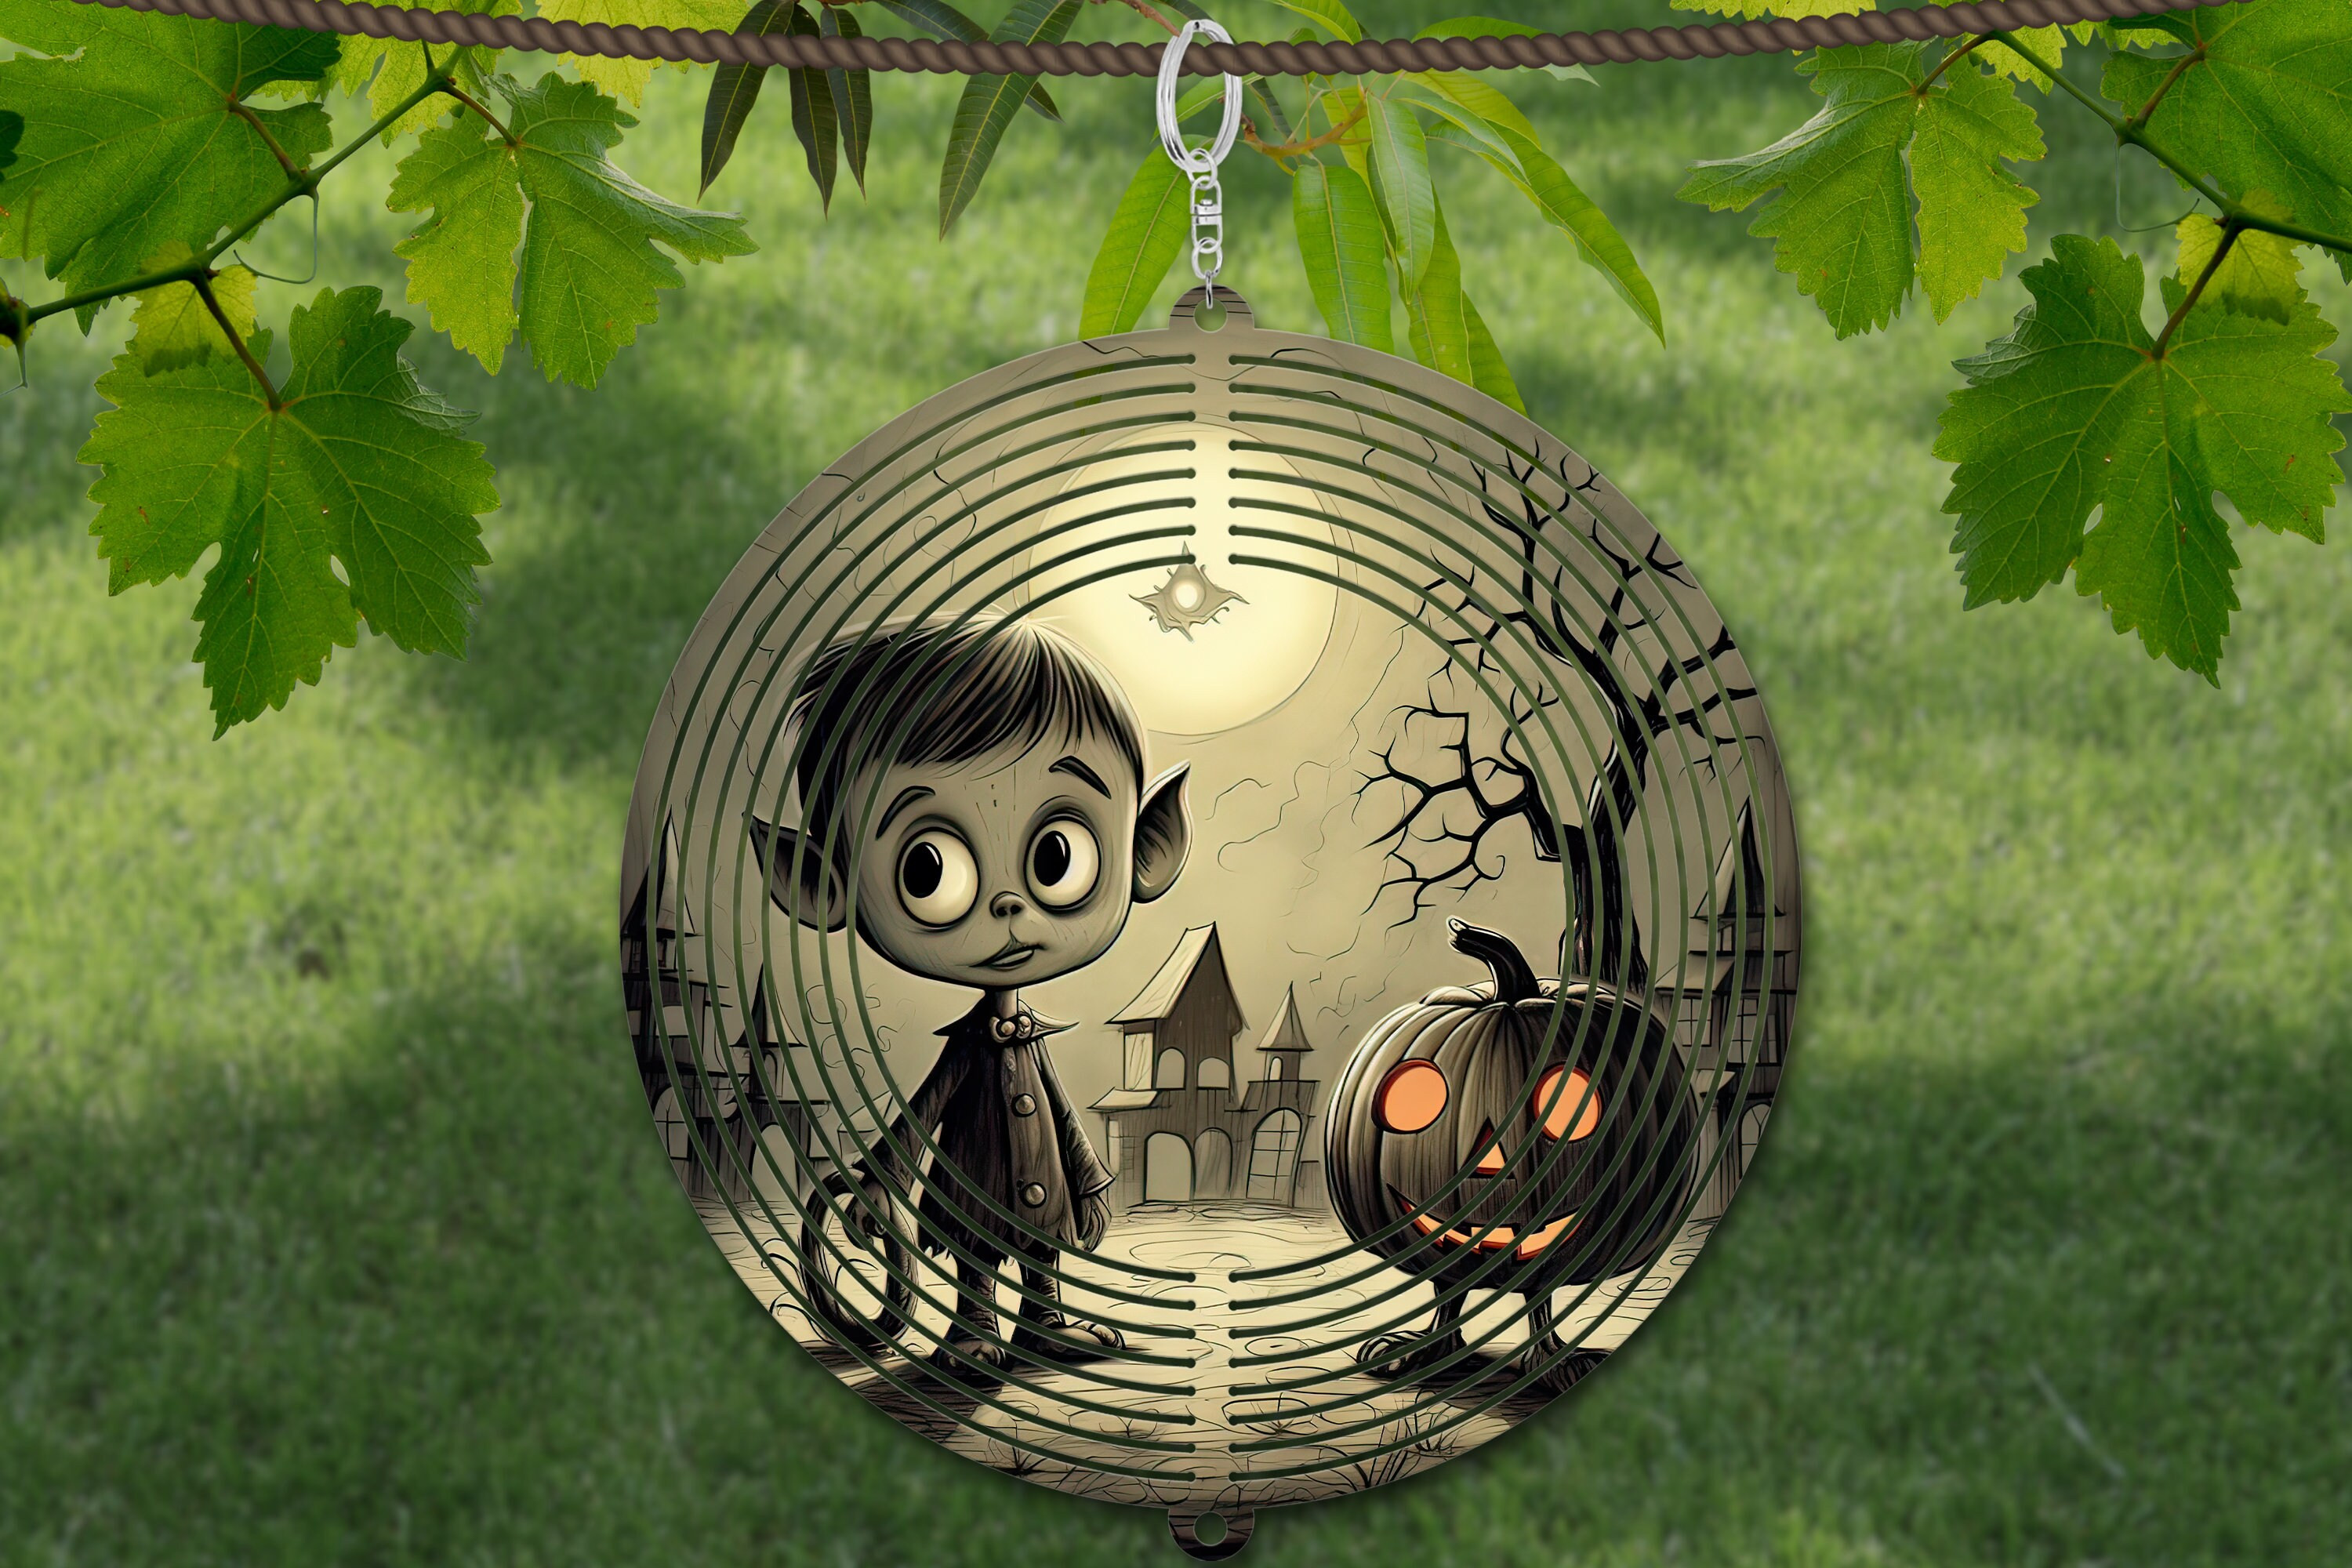 Monster Wind Spinner For Yard And Garden Halloween, Outdoor Garden Yard Decoration, Garden Decor, Chime Art Gift